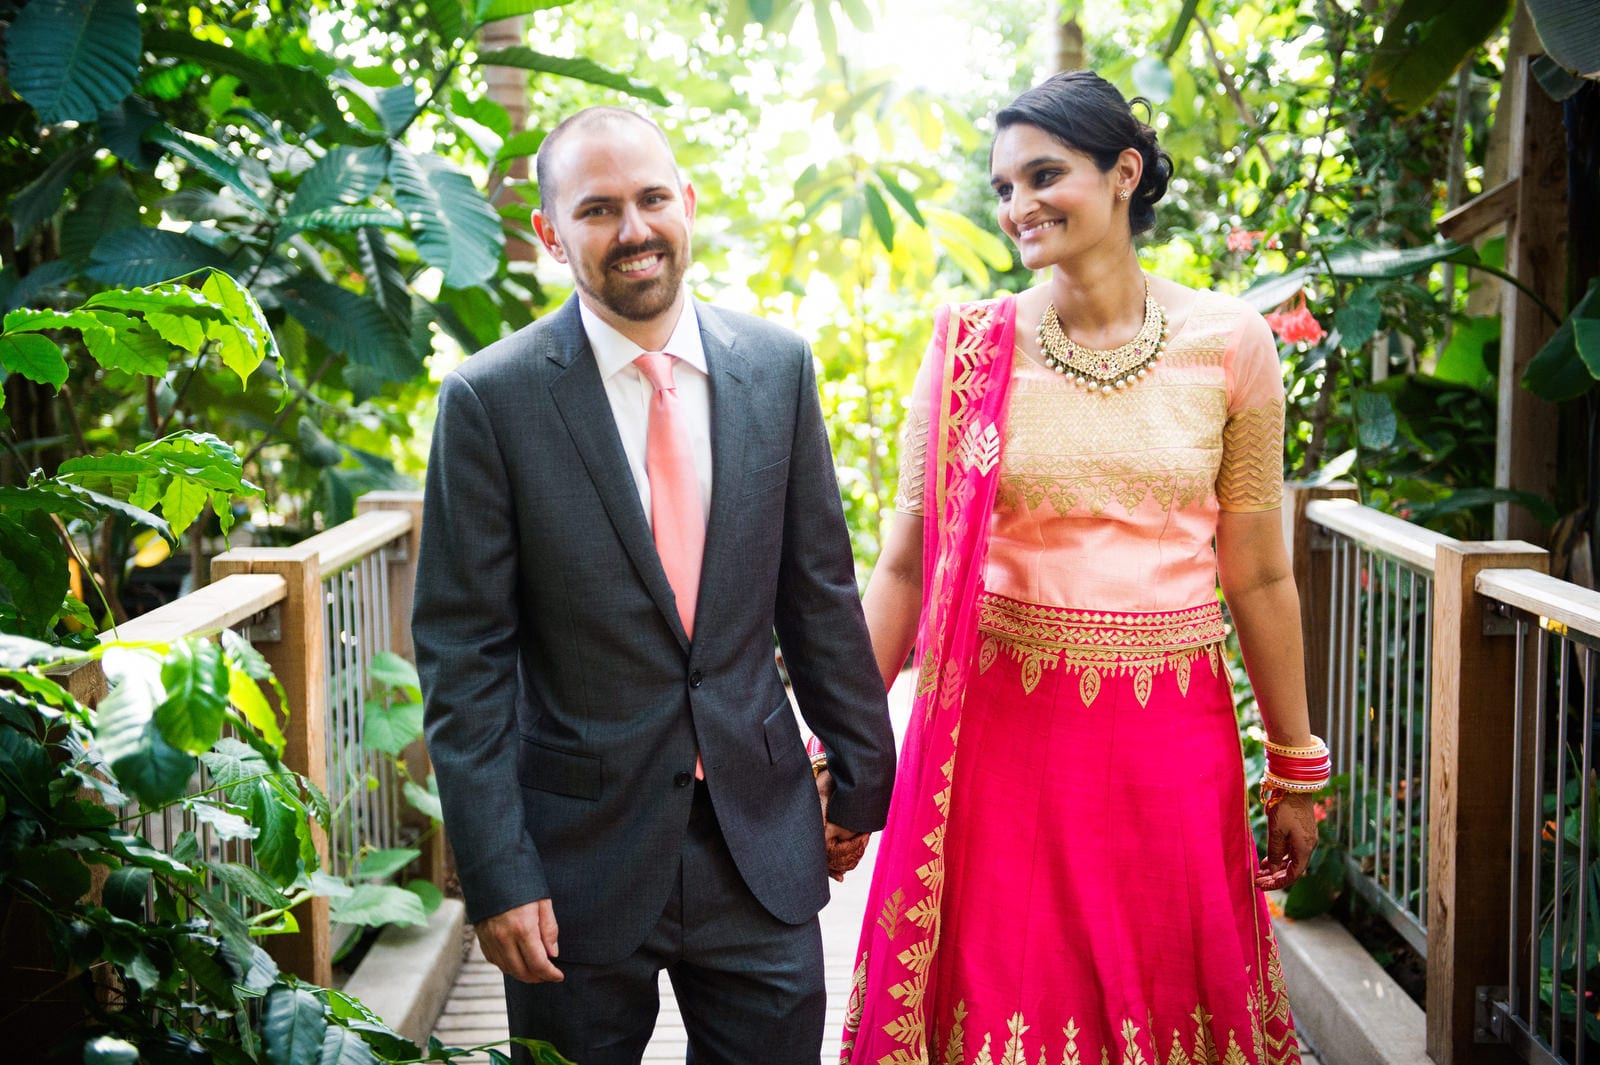 Renaissance Phipps South Asian Wedding